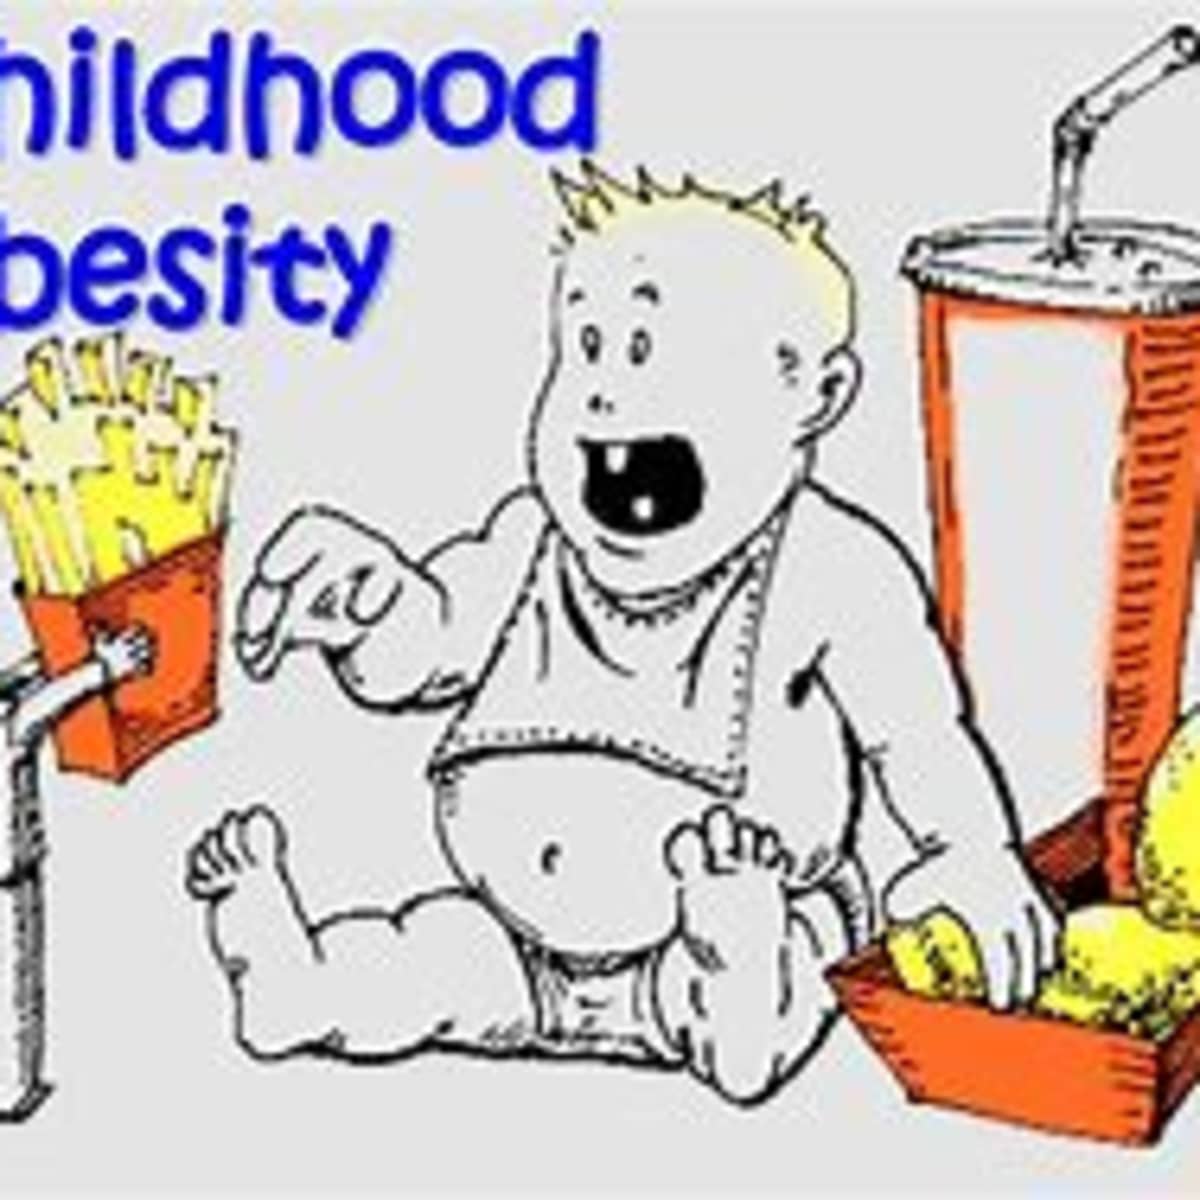 childhood obesity ads